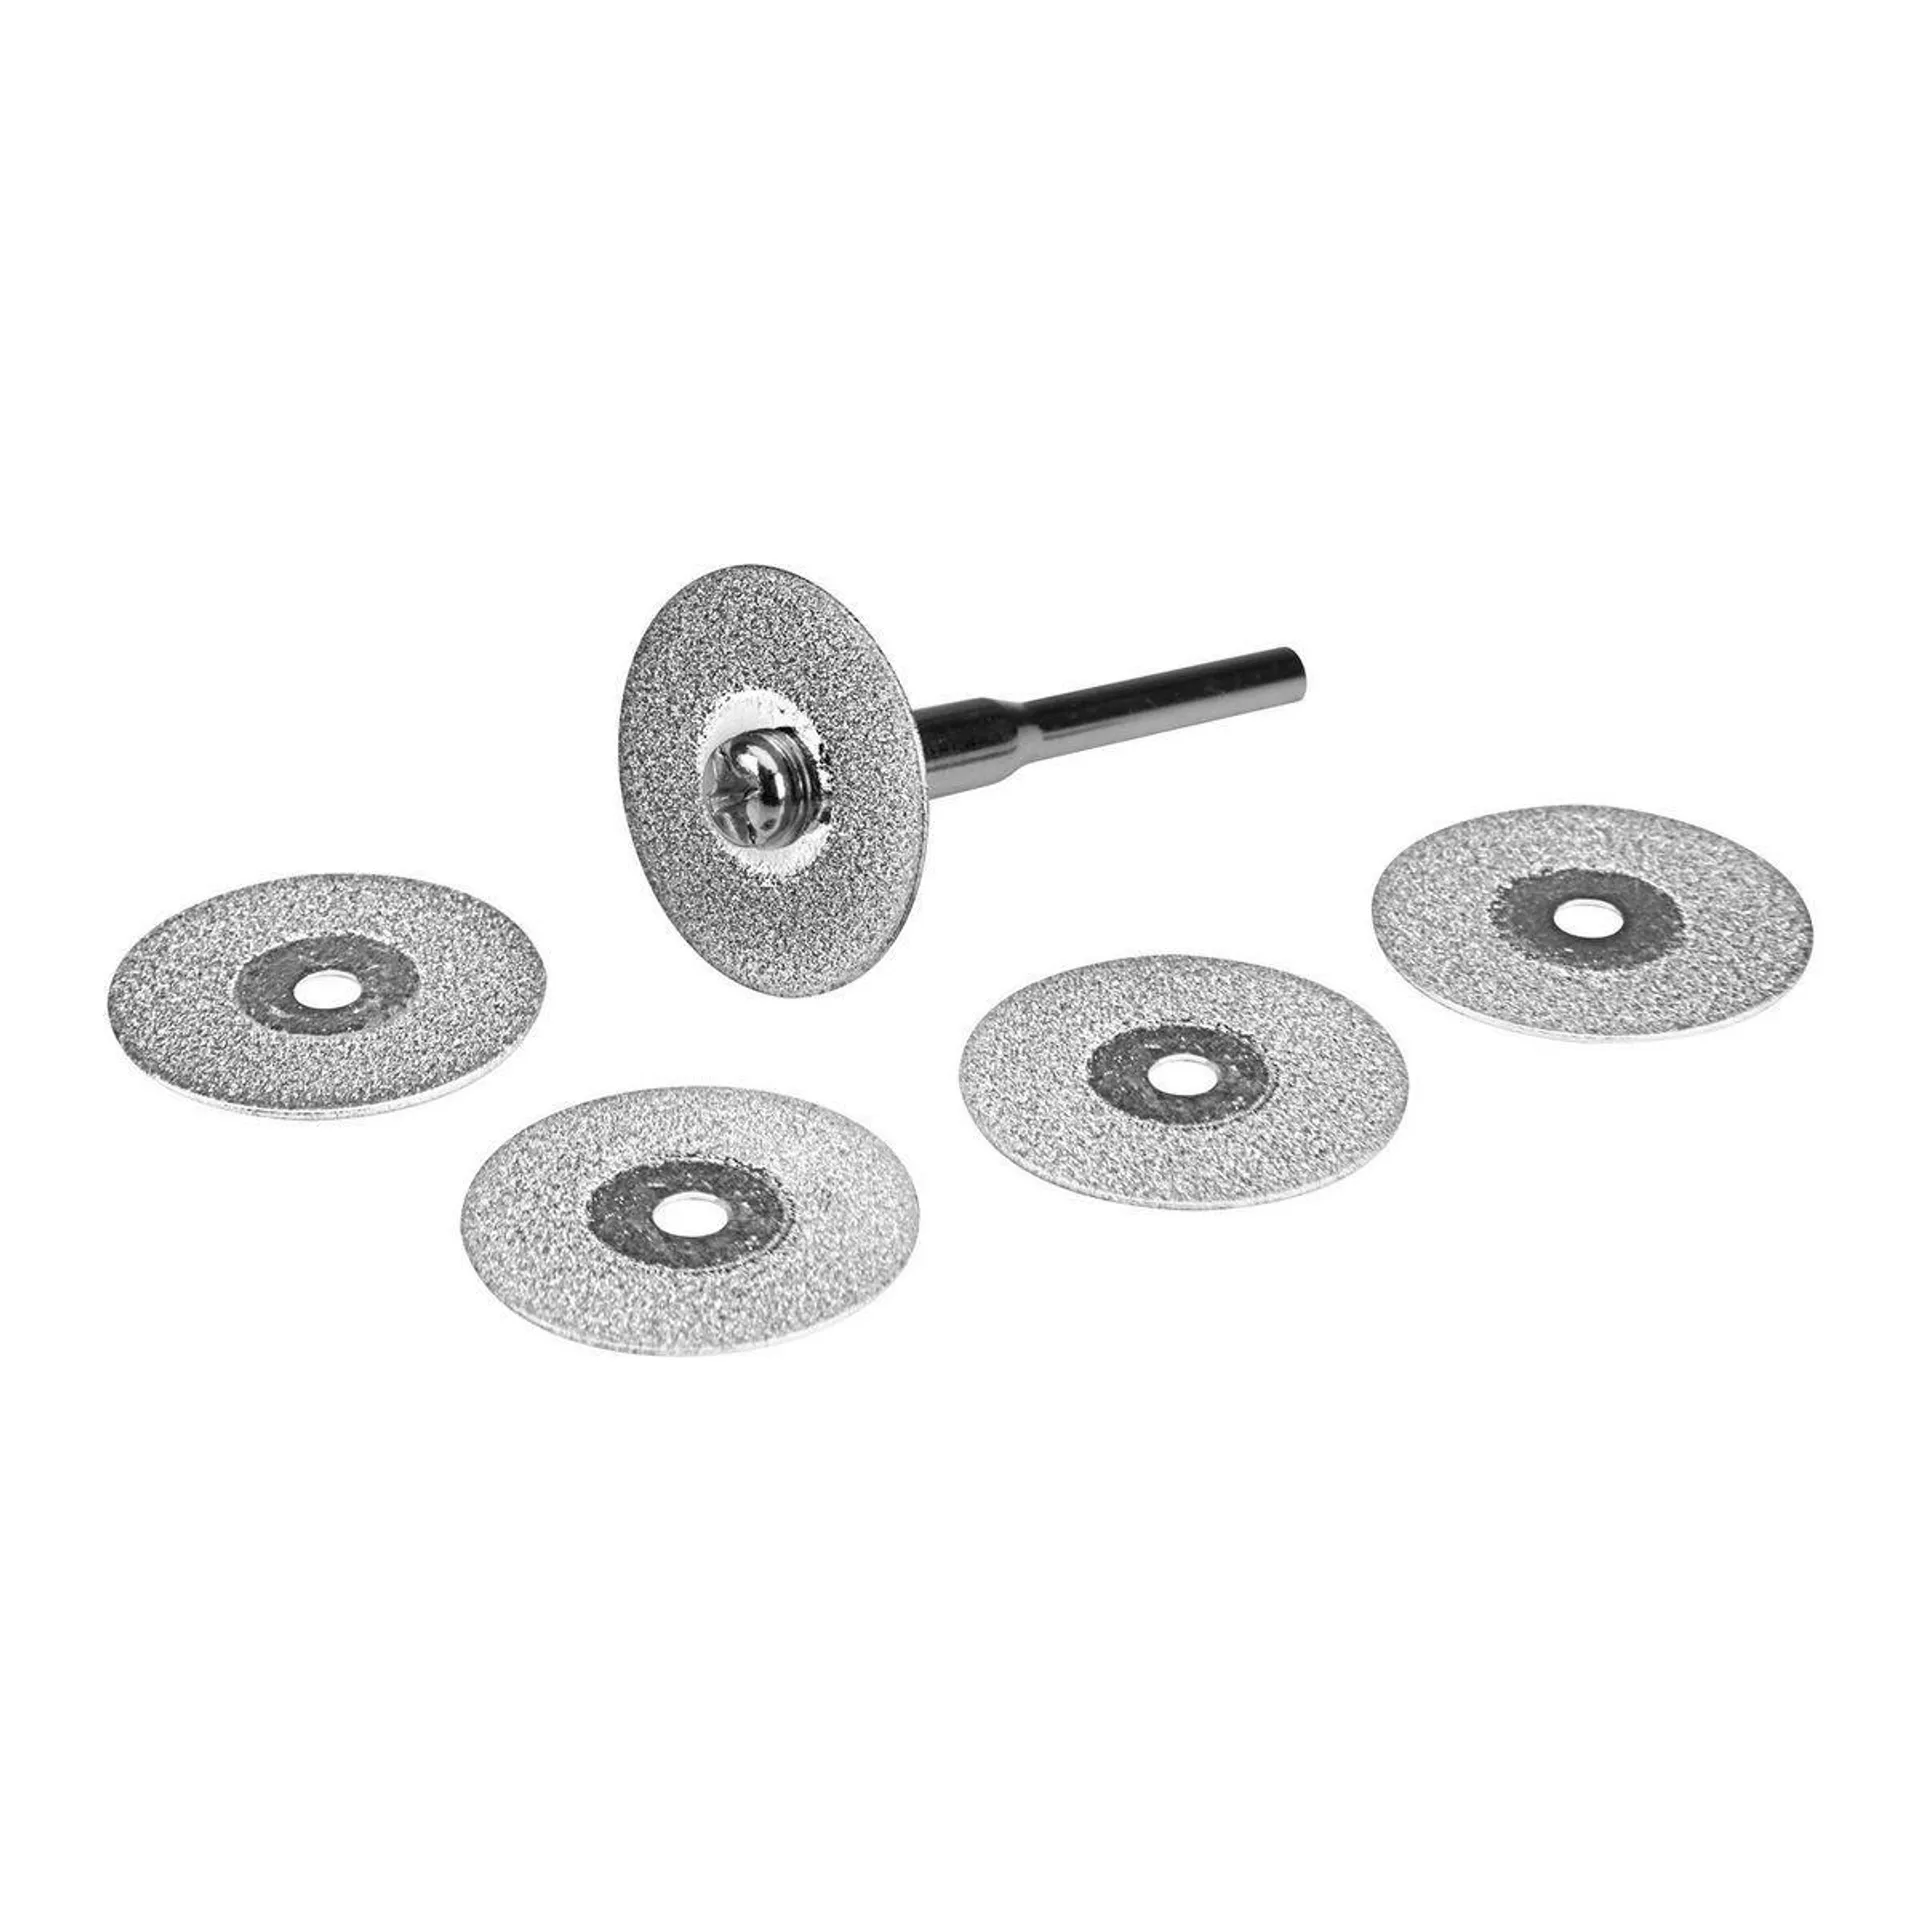 WARRIOR Diamond Rotary Cutting Discs, 5-Piece